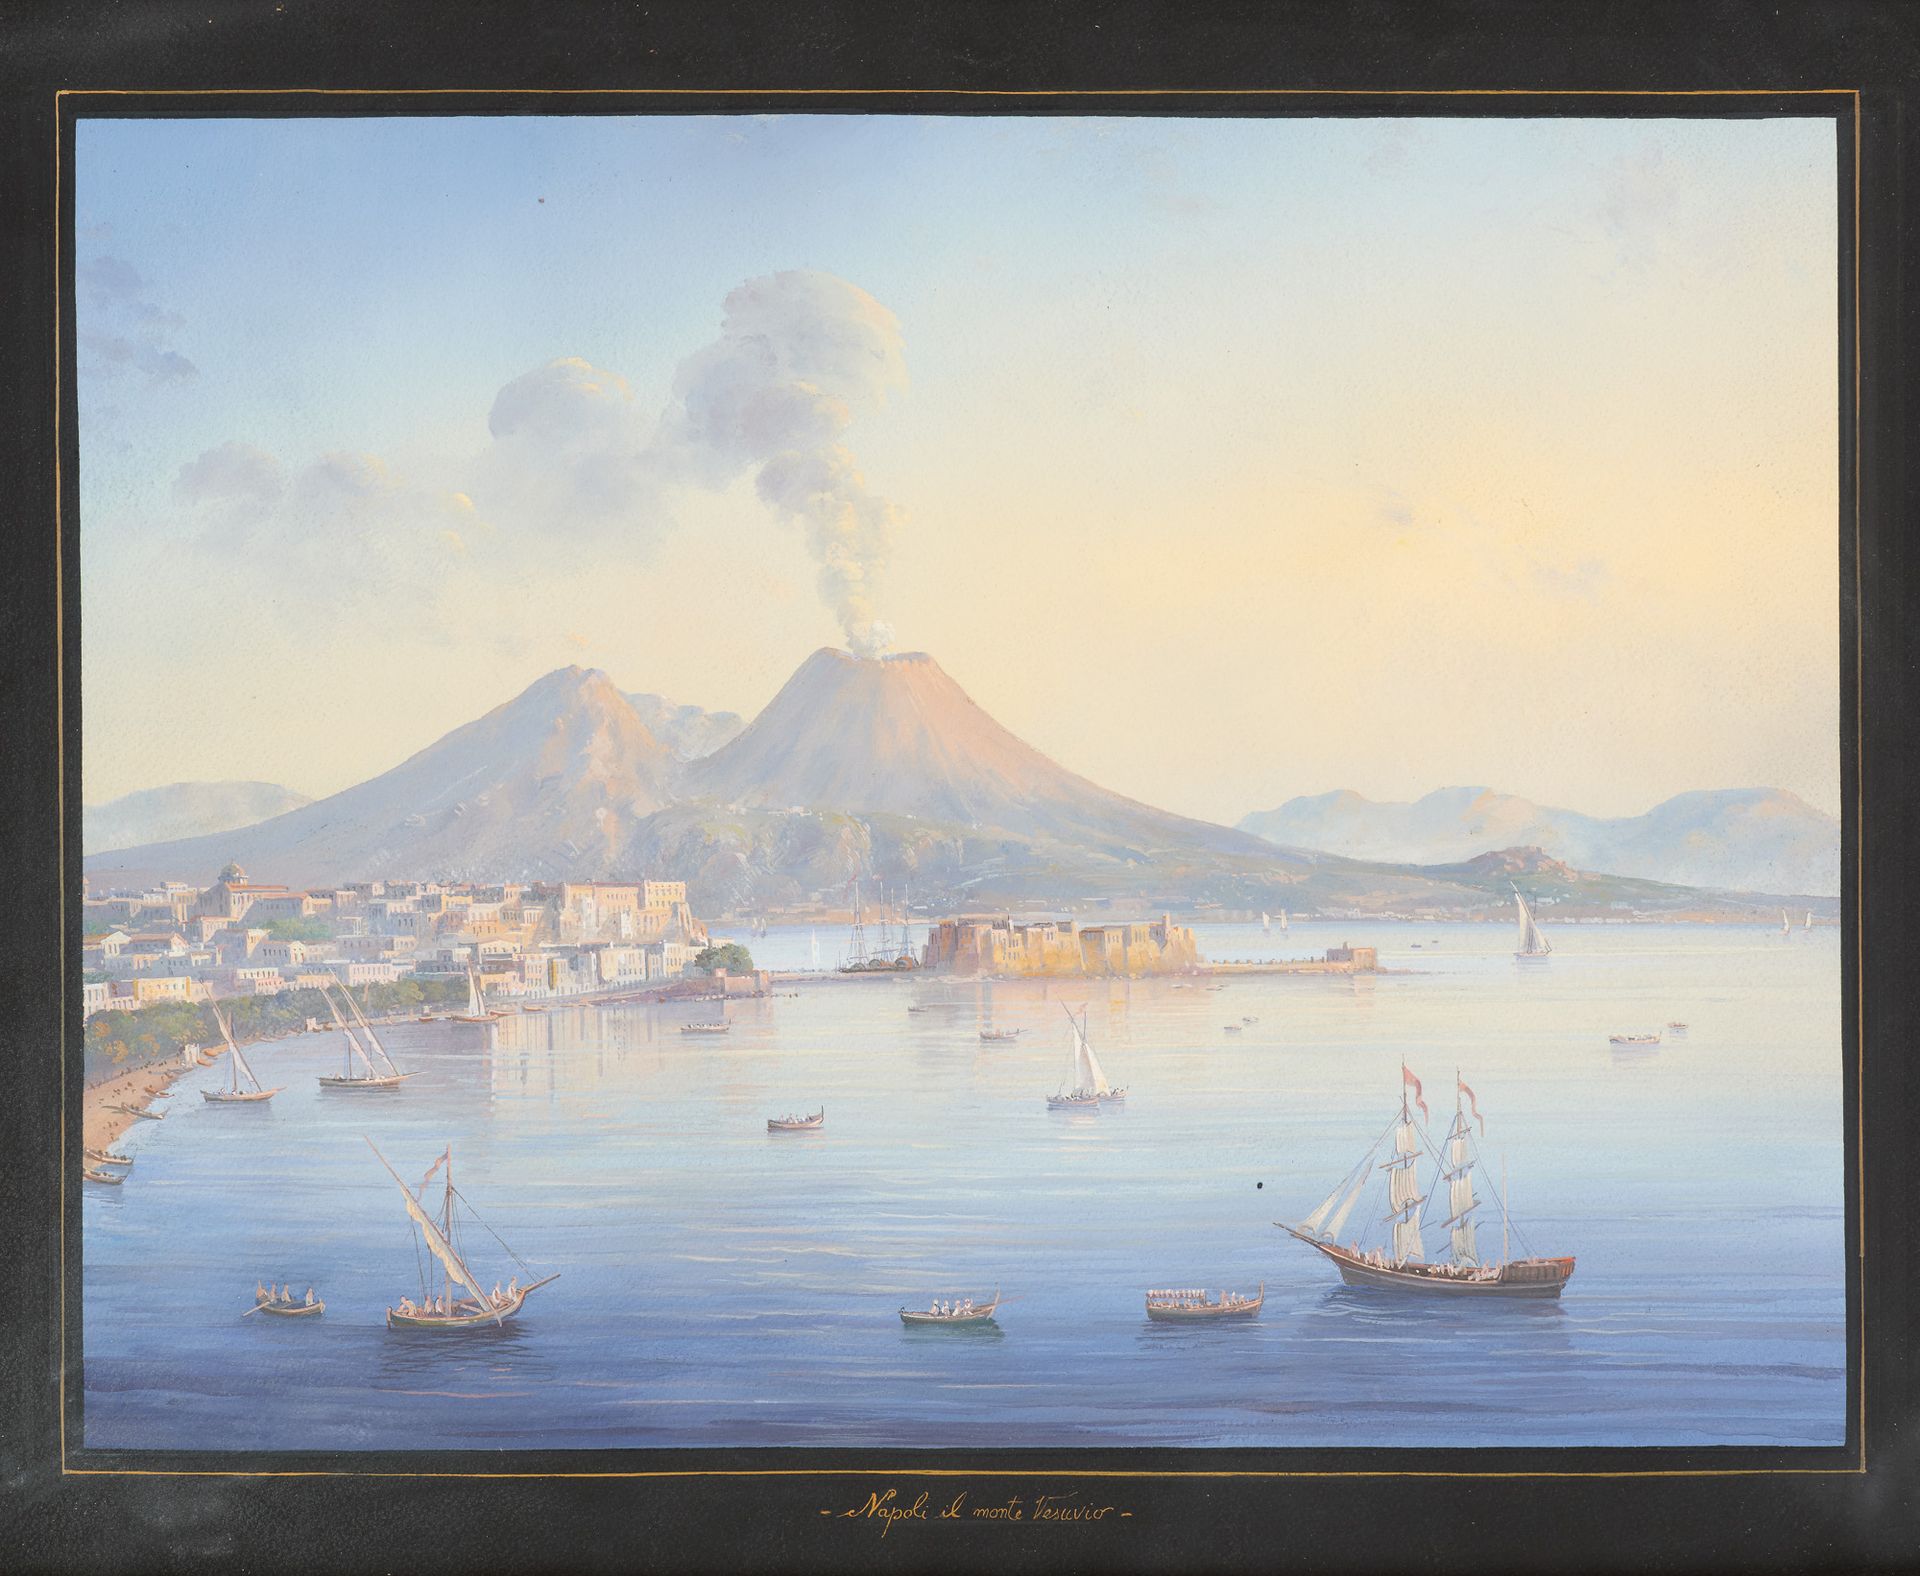 Travail italien 20e. Gouache auf Papier: "Napoli il monte Vesuvio".

Überschrift&hellip;